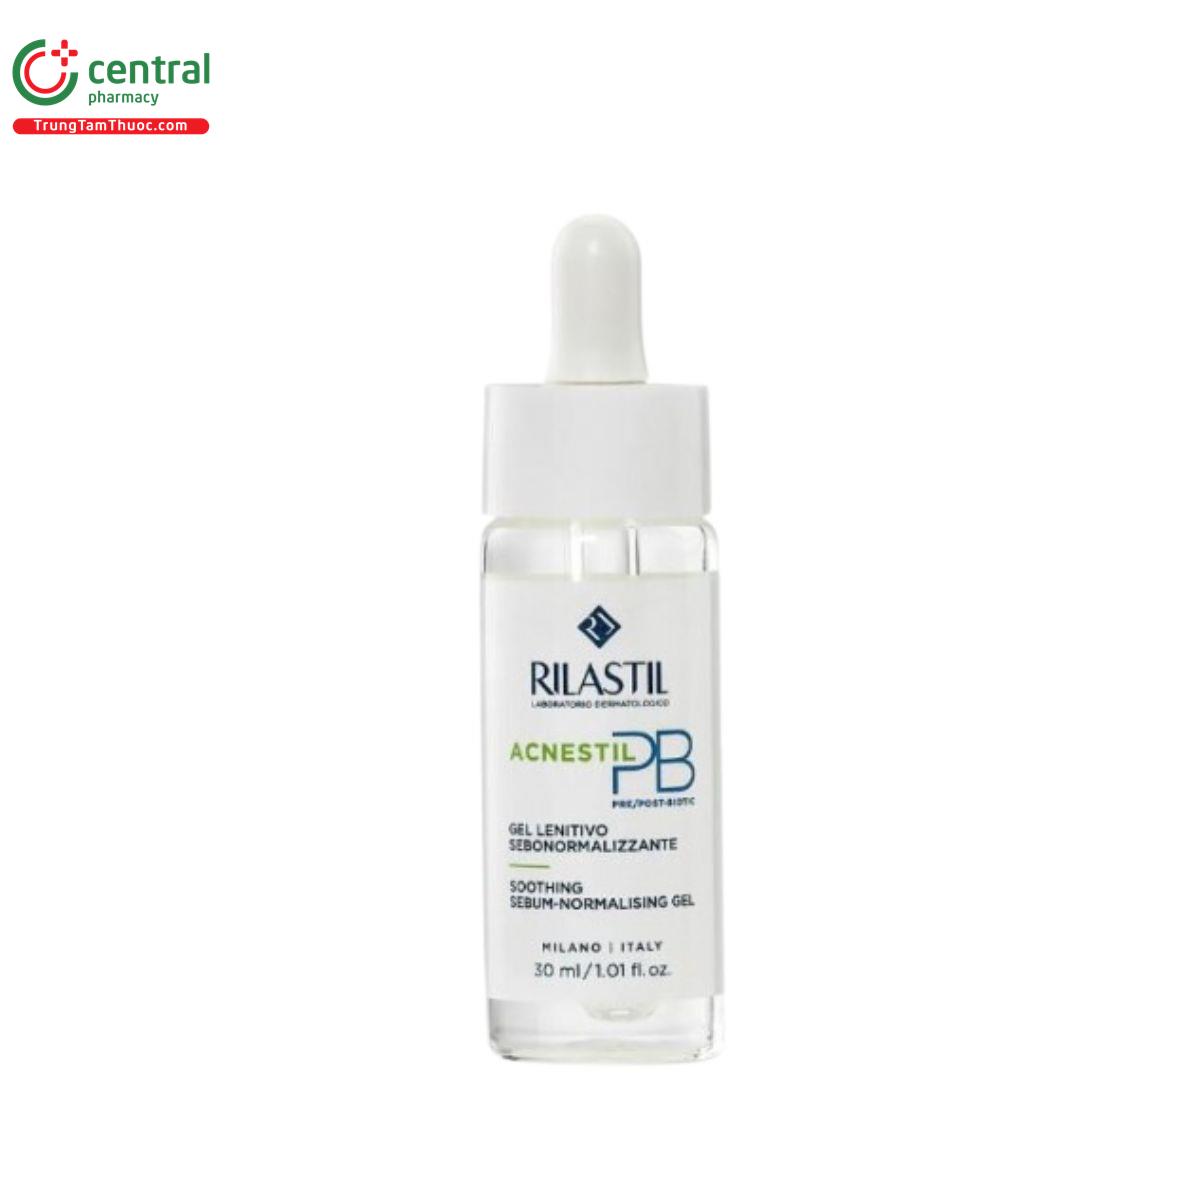 rilastil acnestil pb soothing sebum normalising gel 3 O5583